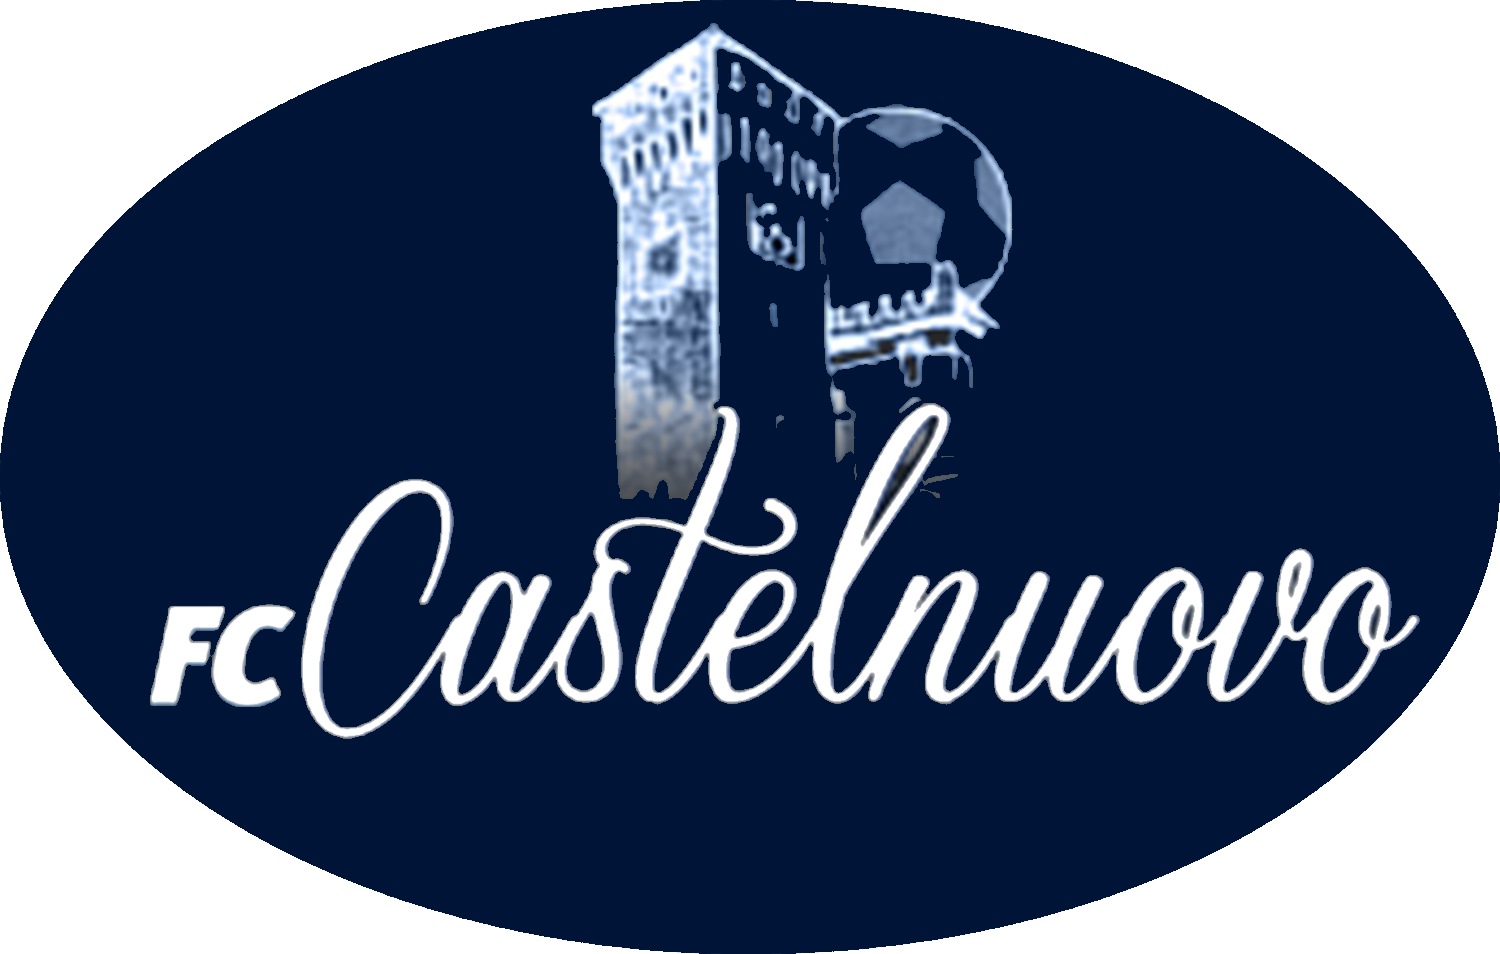 FC CASTELNUOVO v ARCETANA